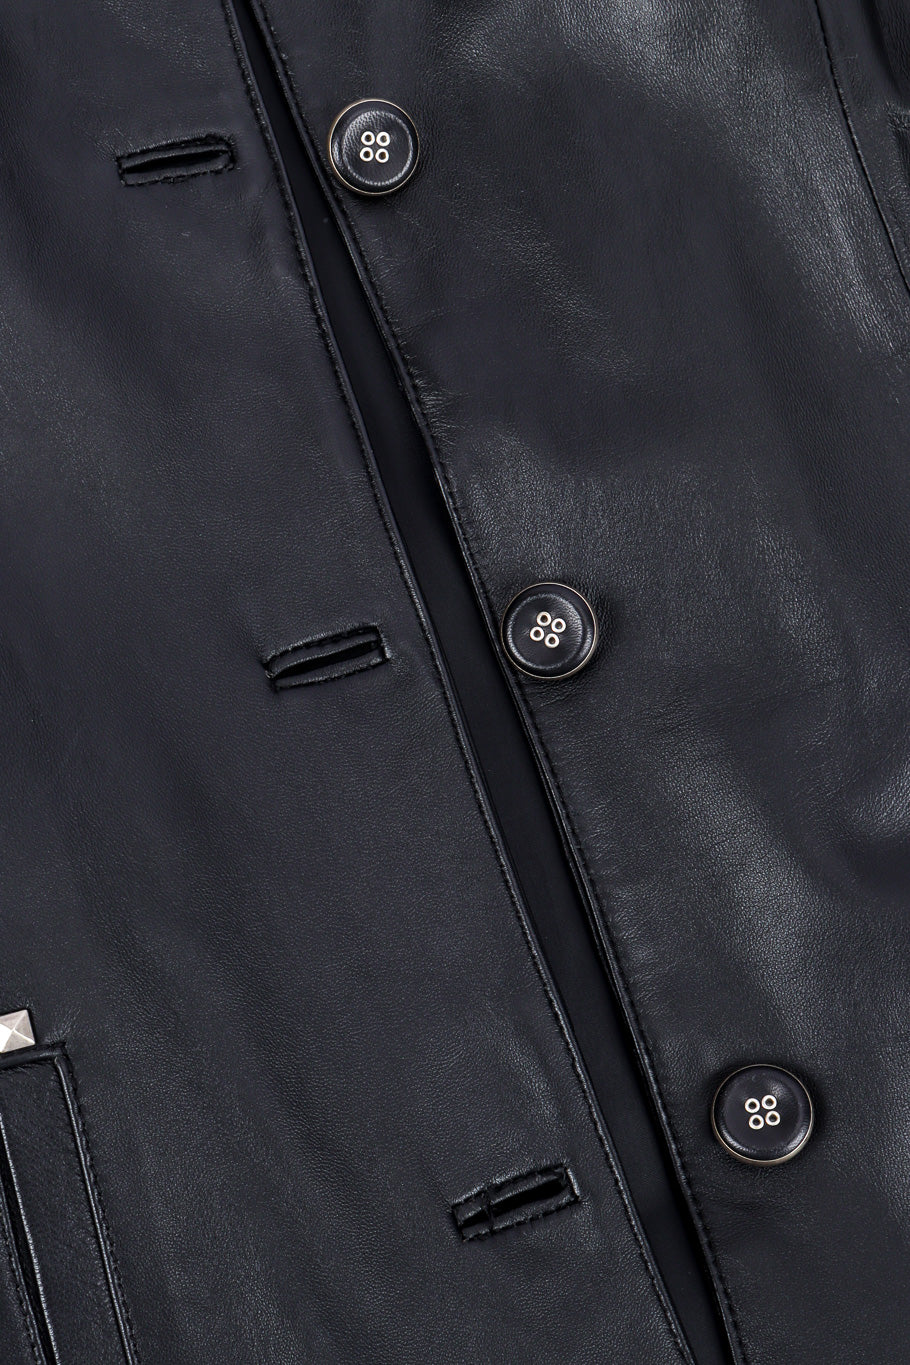 Class Roberto Cavalli Studded Leather Trench Coat button closure closeup @recessla